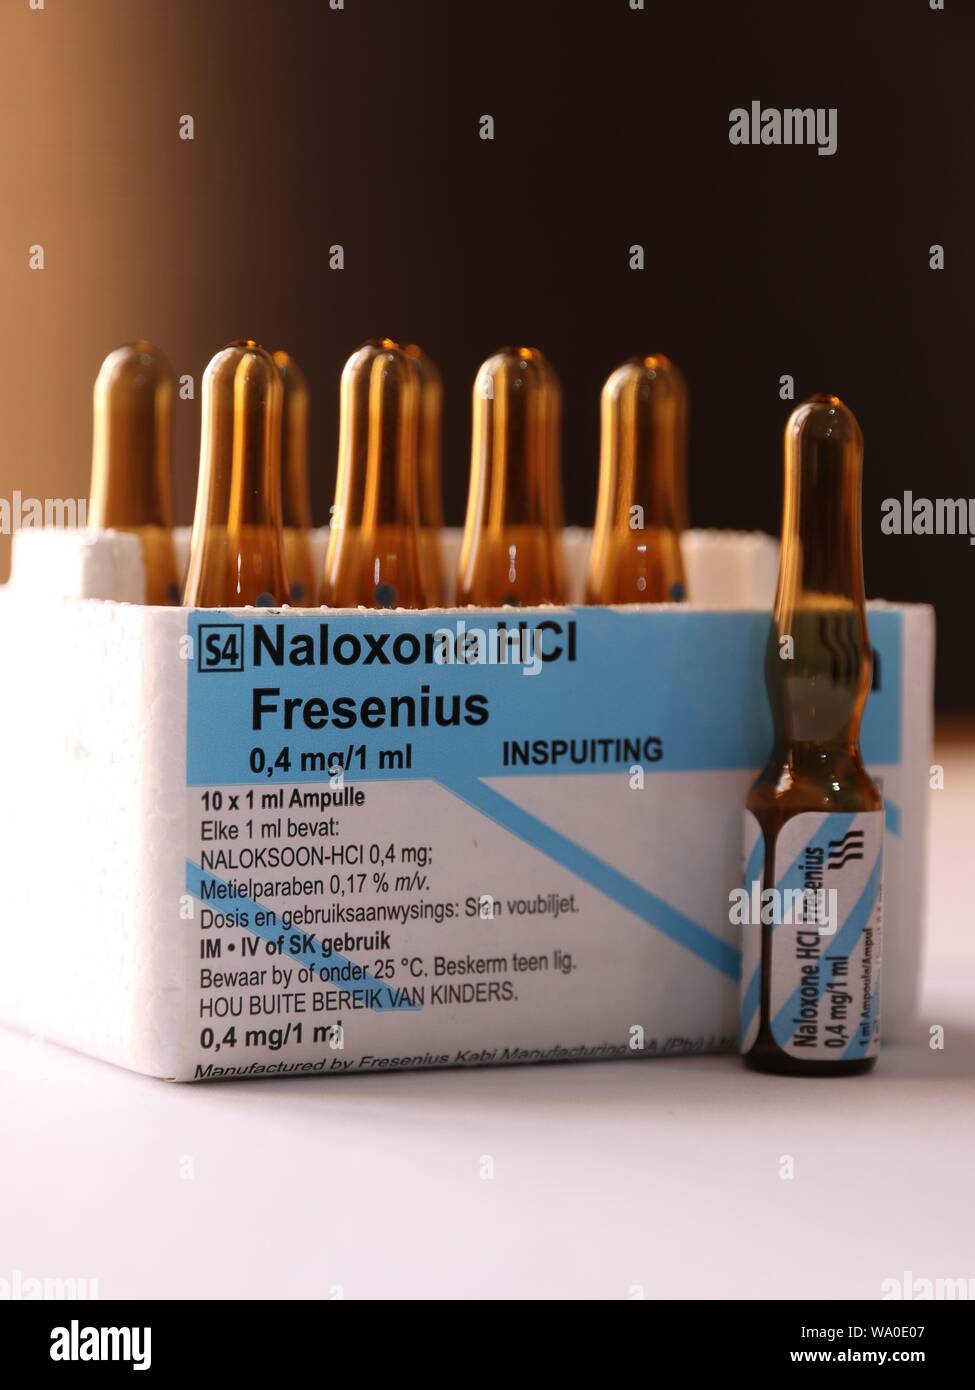 Naloxone Ampoules , Opioid antagonist medication Stock Photo